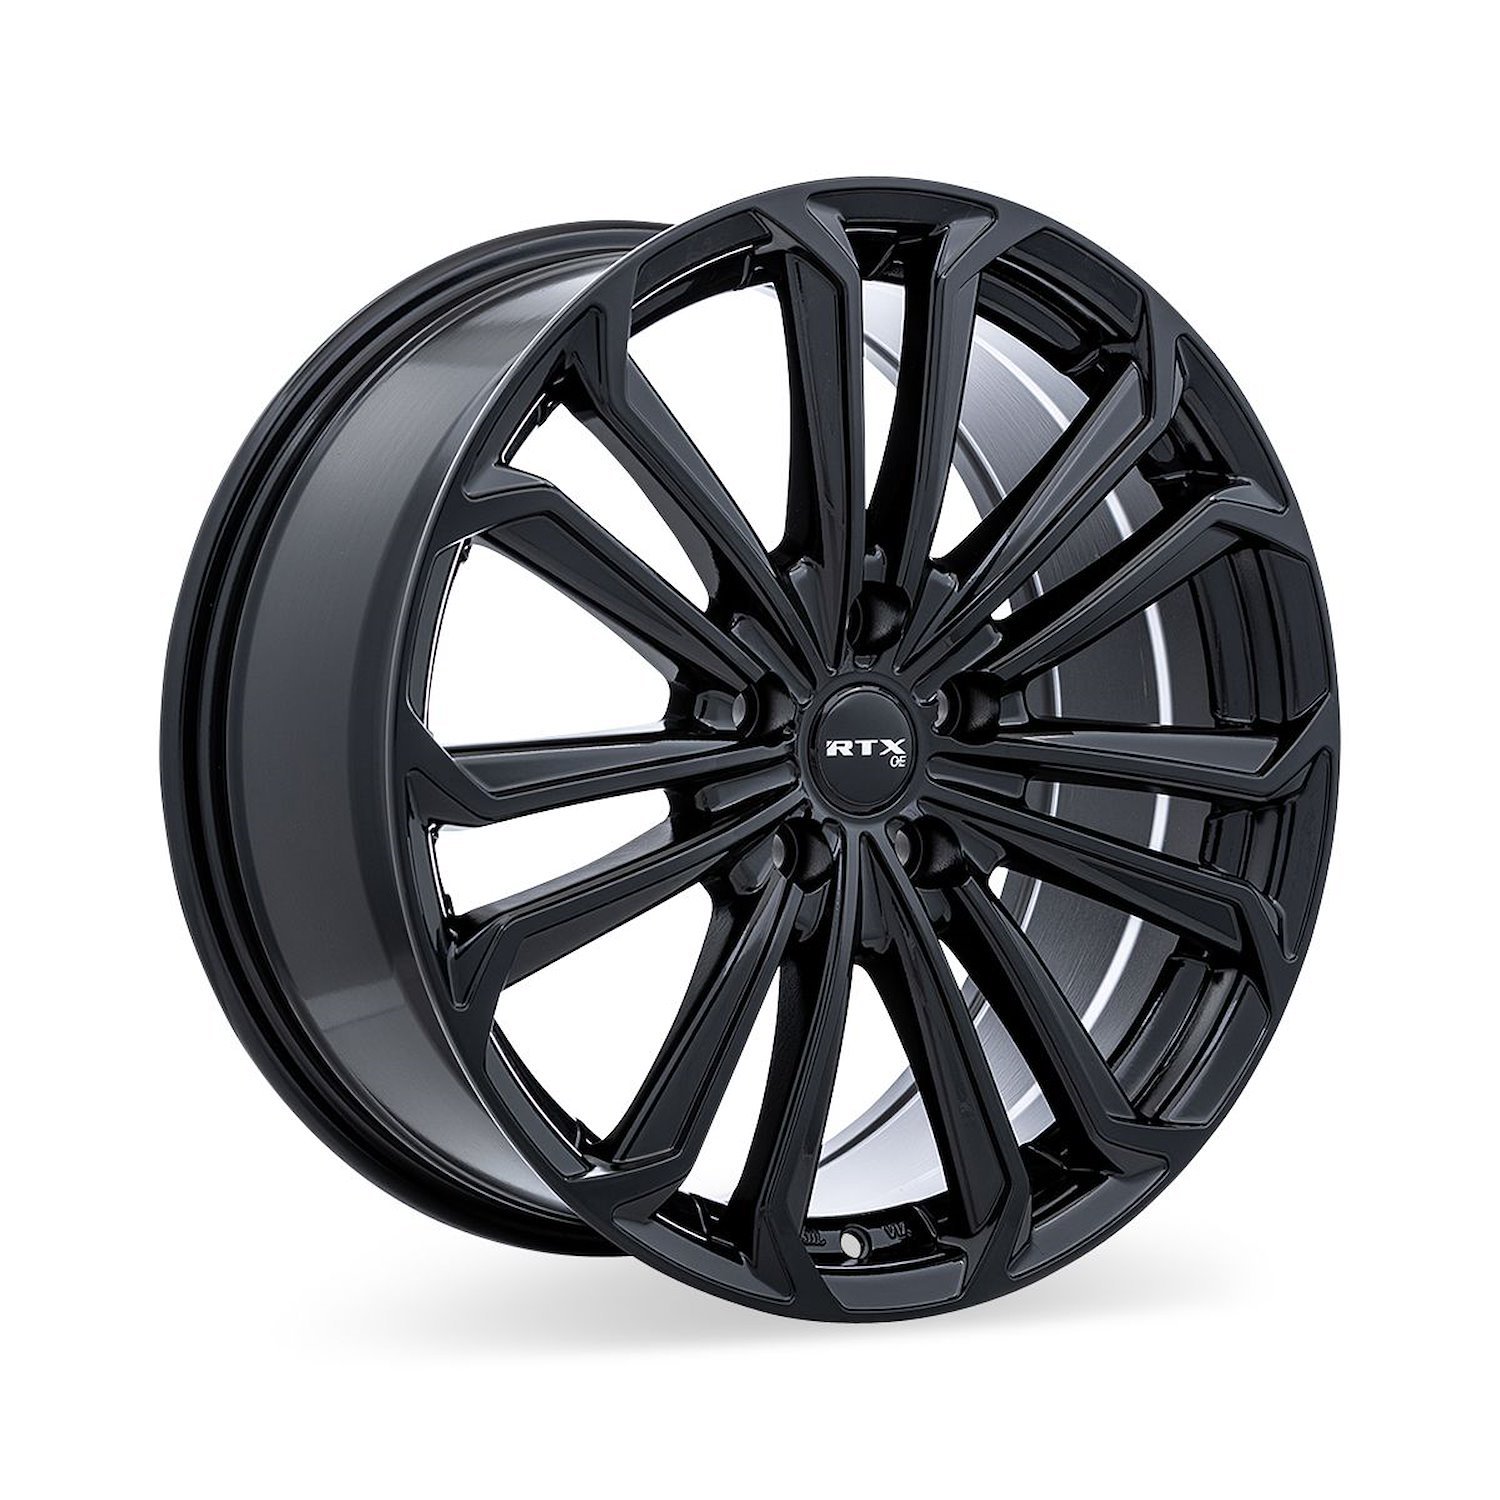 083089 OE-Series Aura Wheel [Size: 18" x 8"] Gloss Black Finish